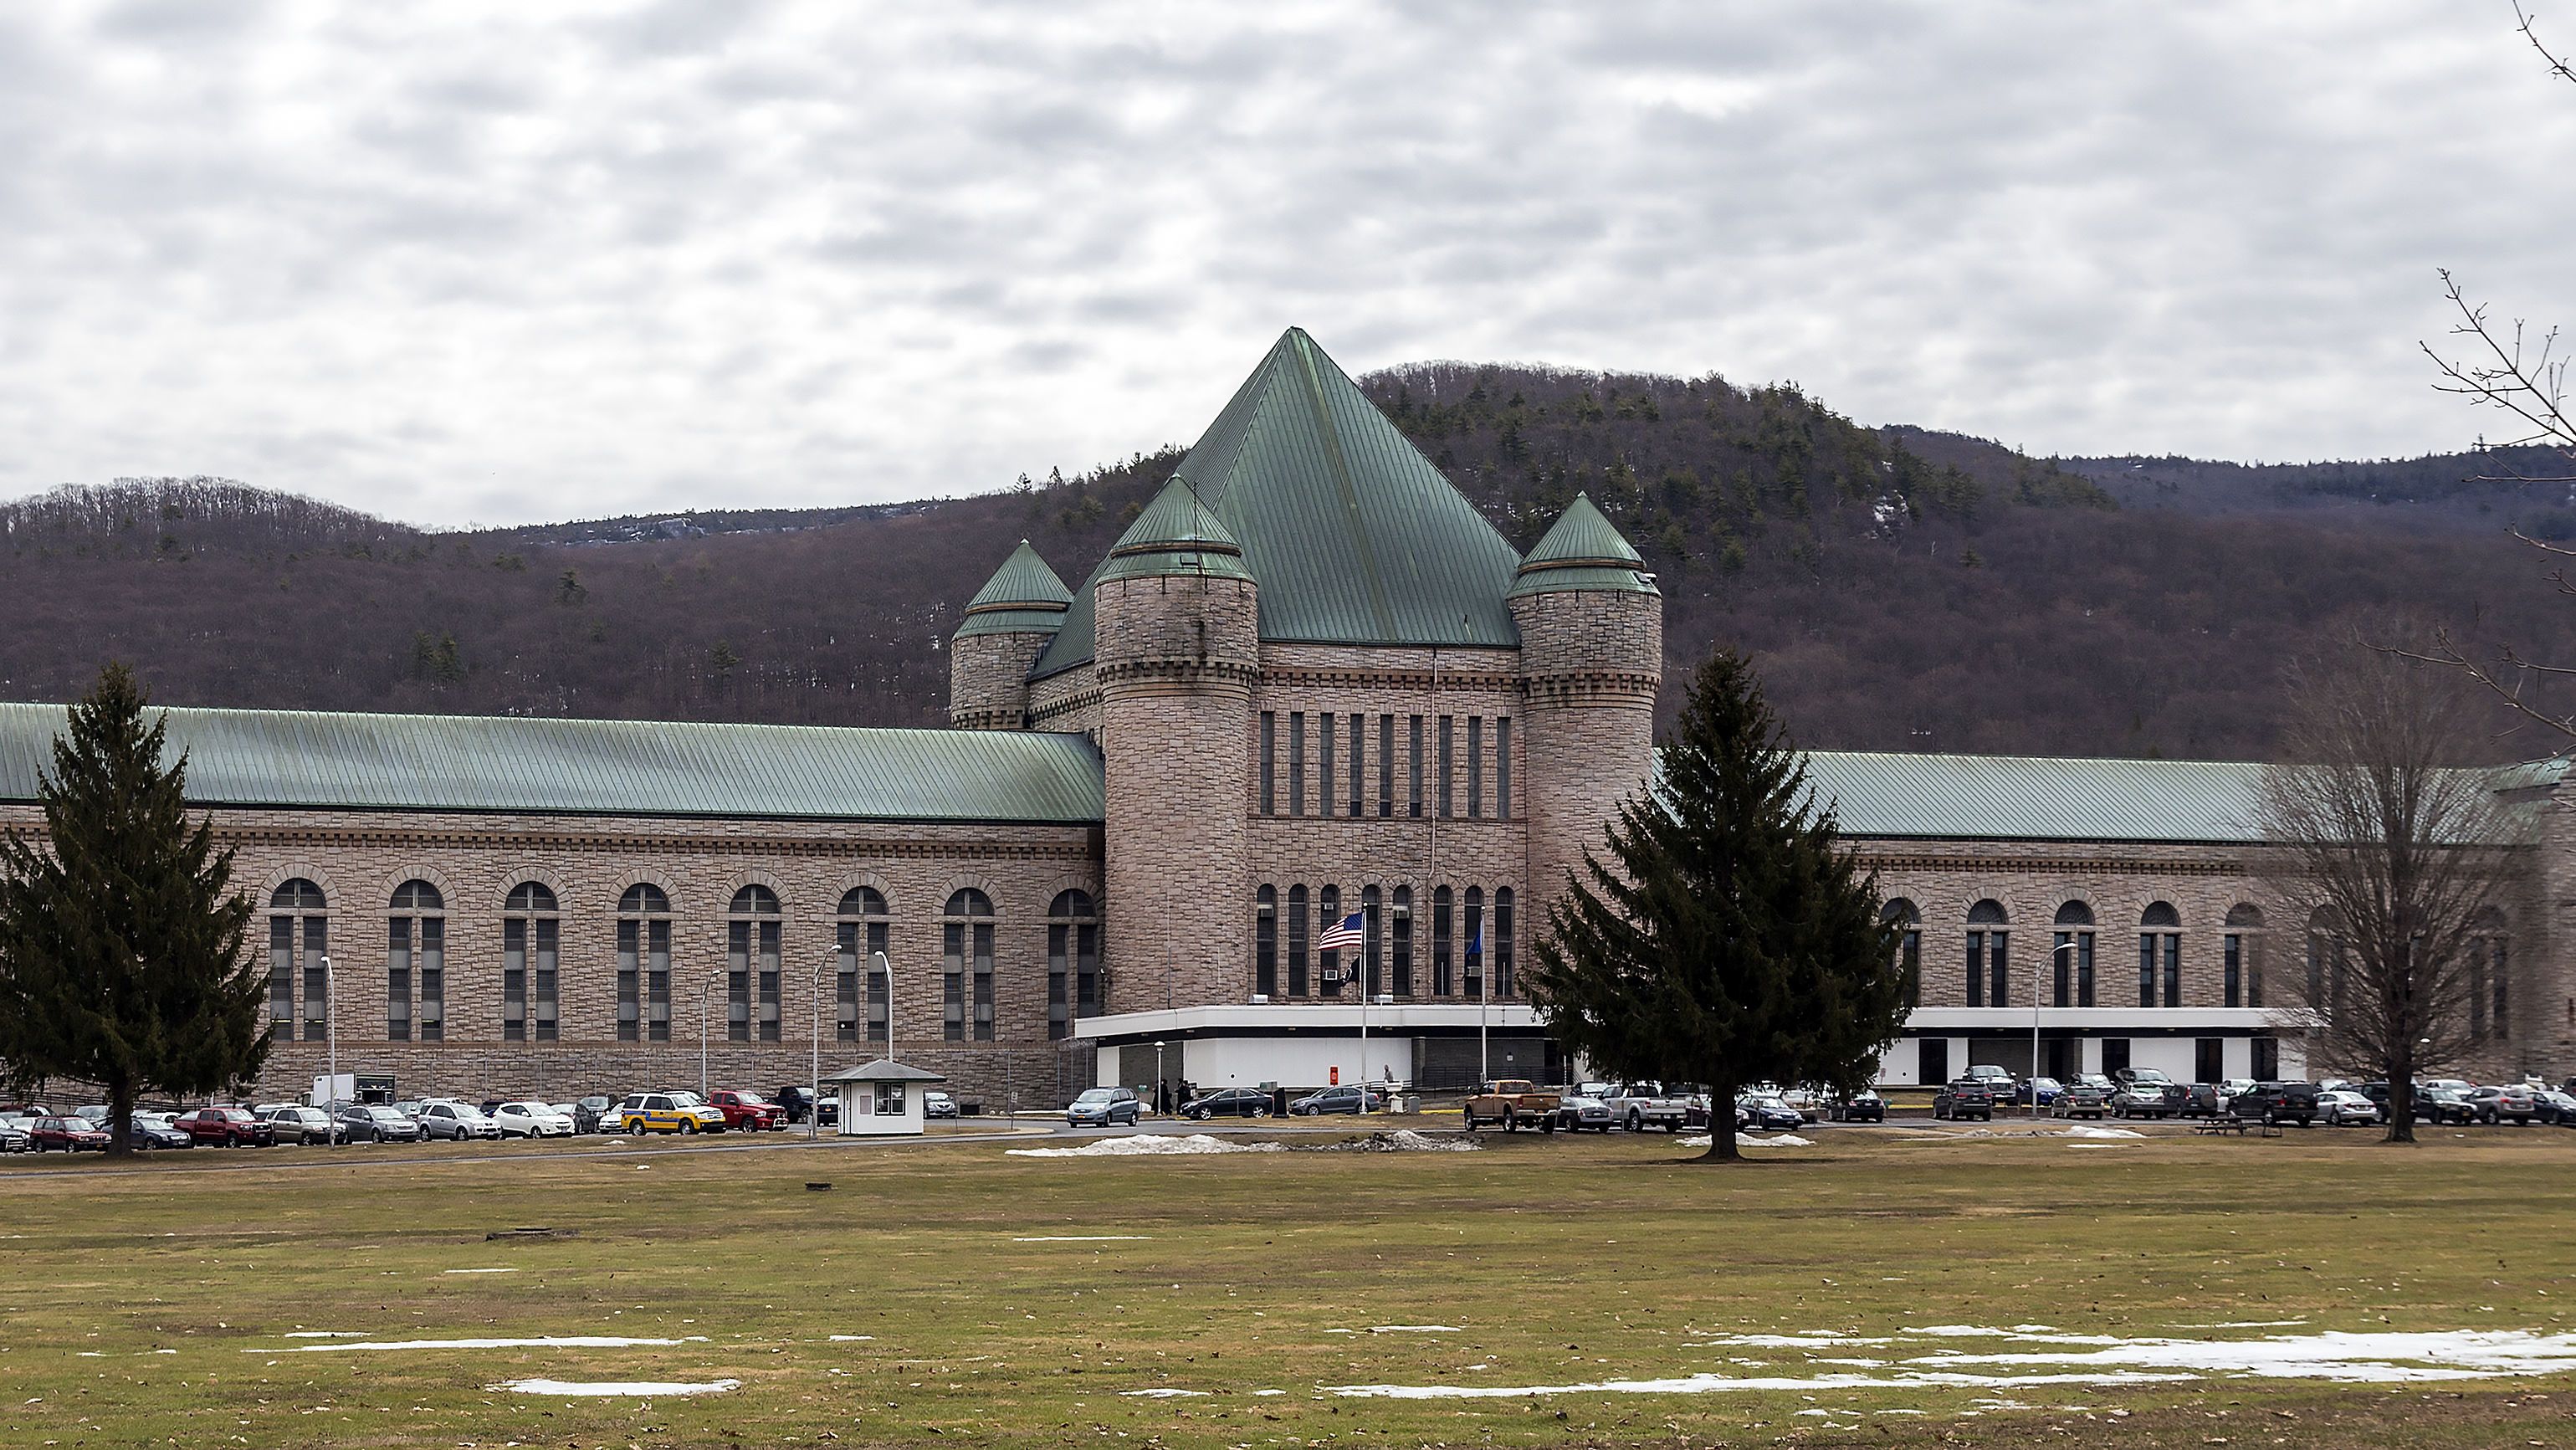 Inmates at this maximum-security prison in upstate New York defeated Harvard's debate team.